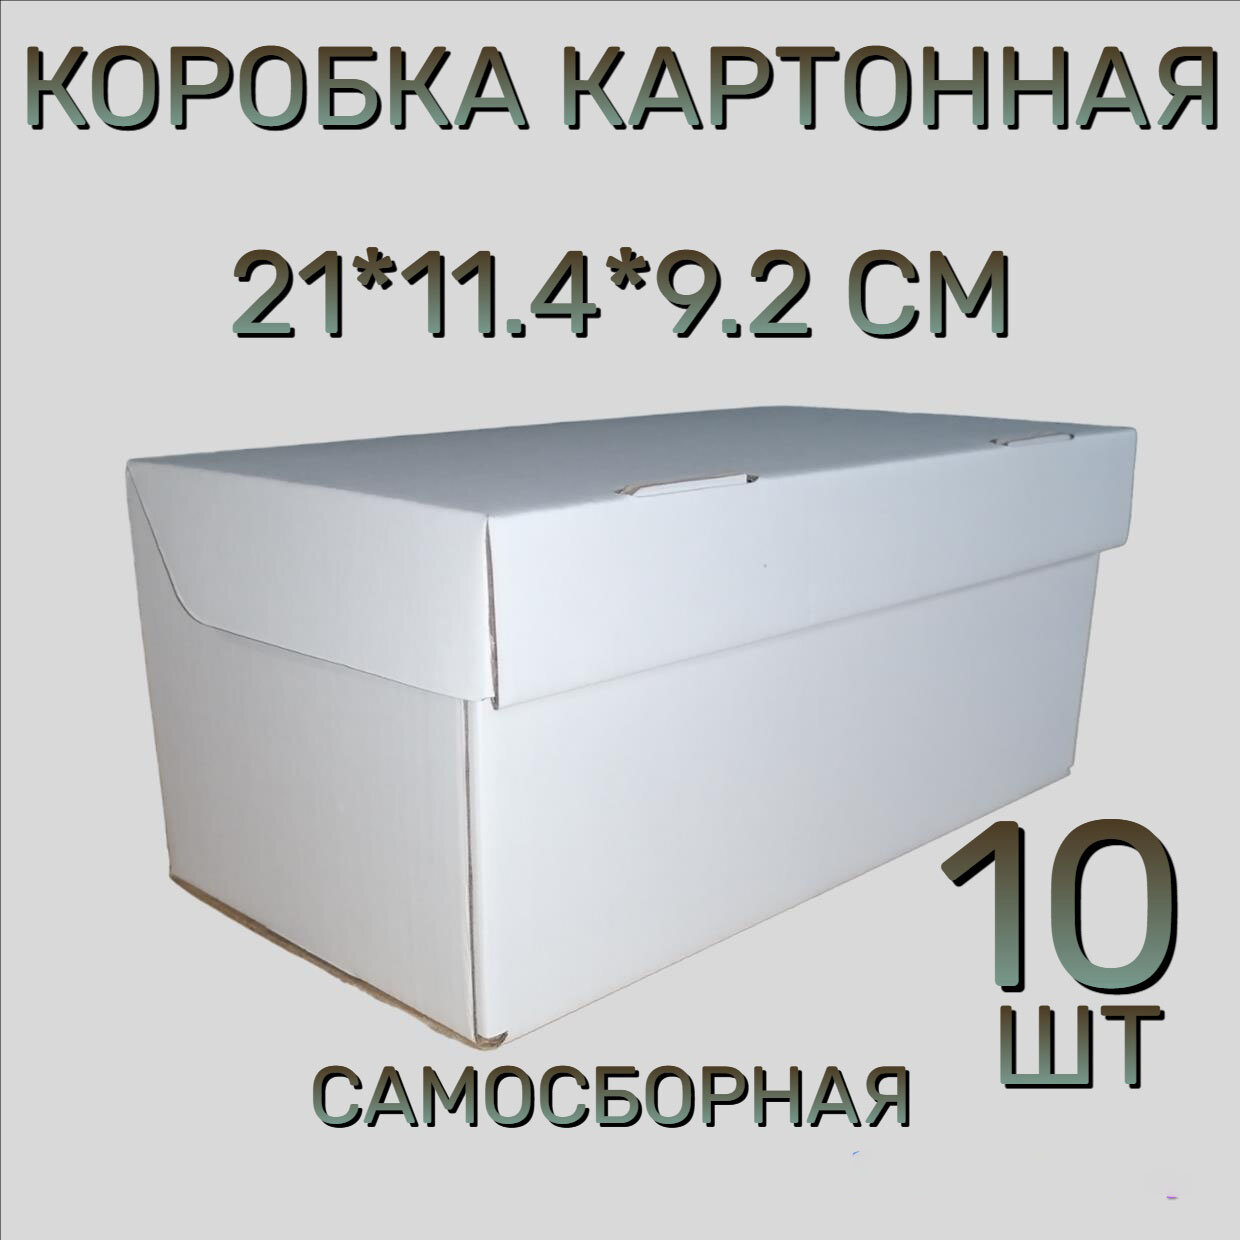 Коробка картонная самосборная, 21х11,4х9,2 см,10 шт. Белая. Подарочная коробка 210х114х92 мм.